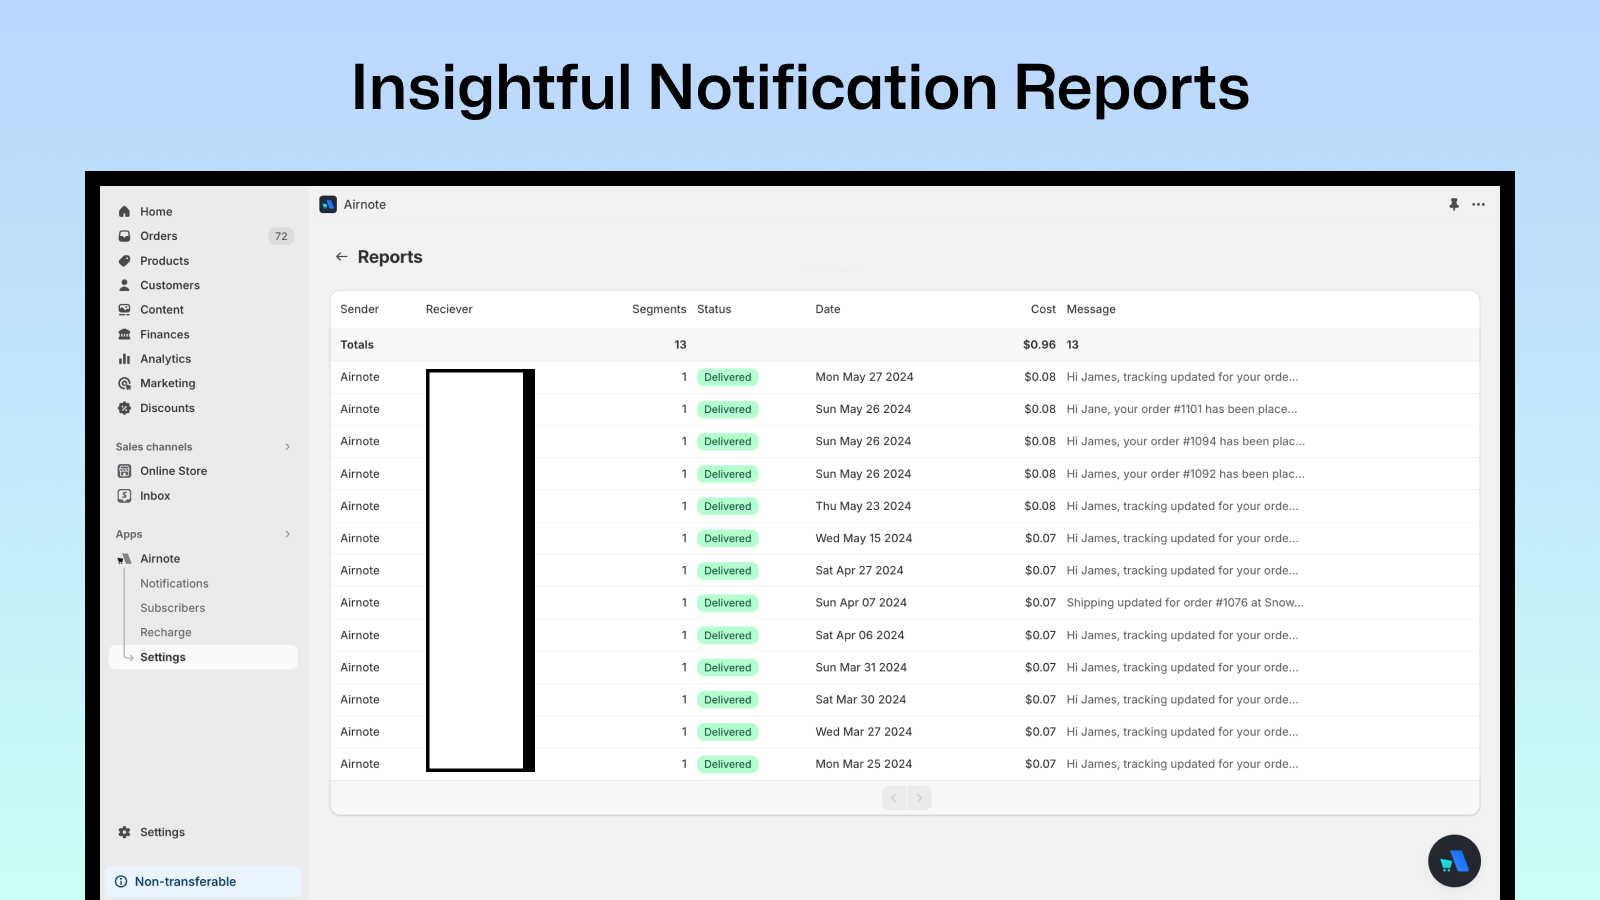 Insightful notification reports list